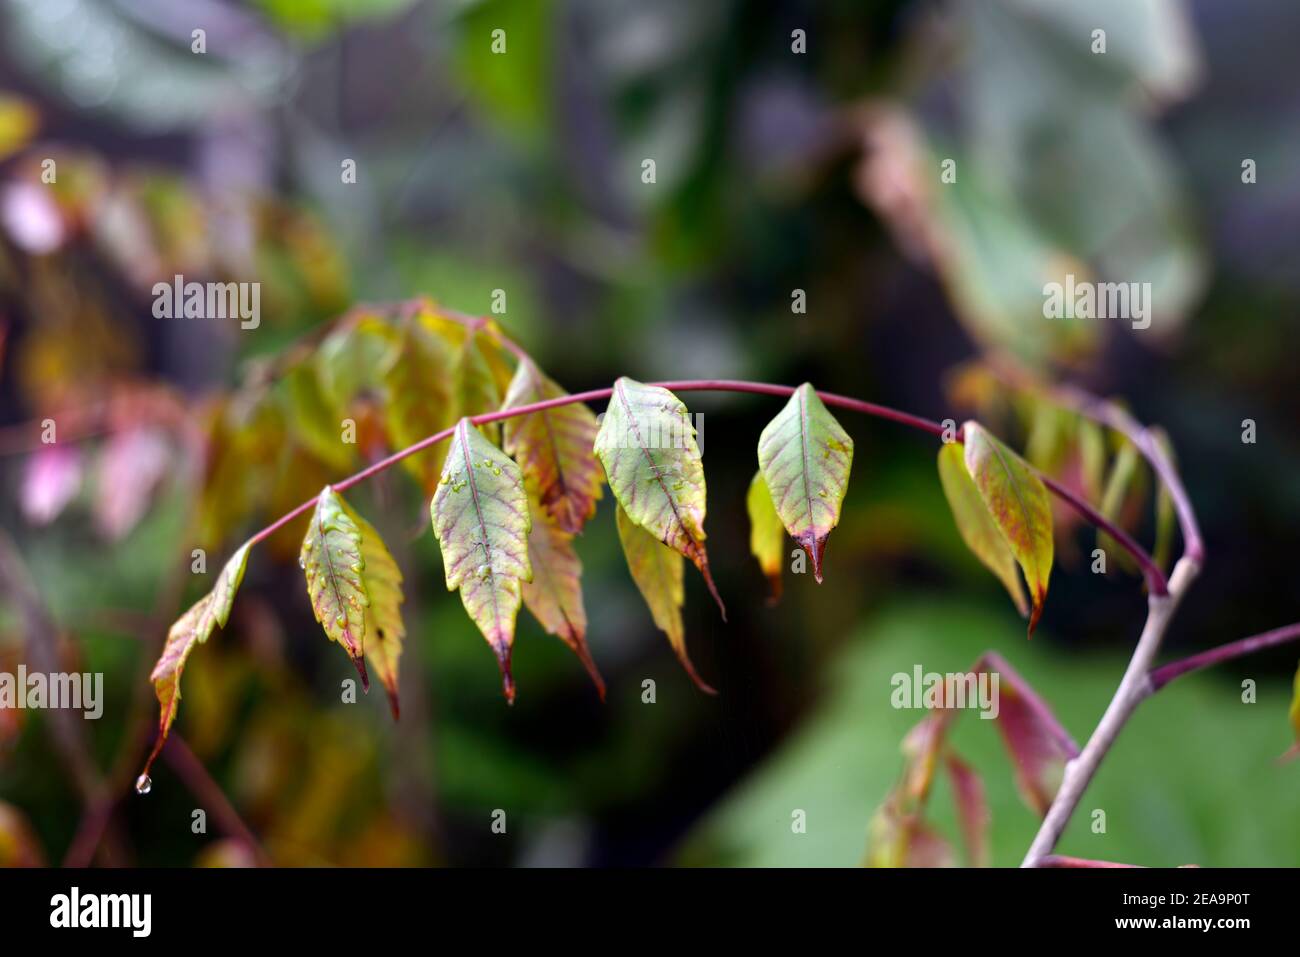 rhus potaninii,Rhus henryi,Potanin's sumac,deciduous tree,leaves,foliage,garden,trees,RM Floral Stock Photo